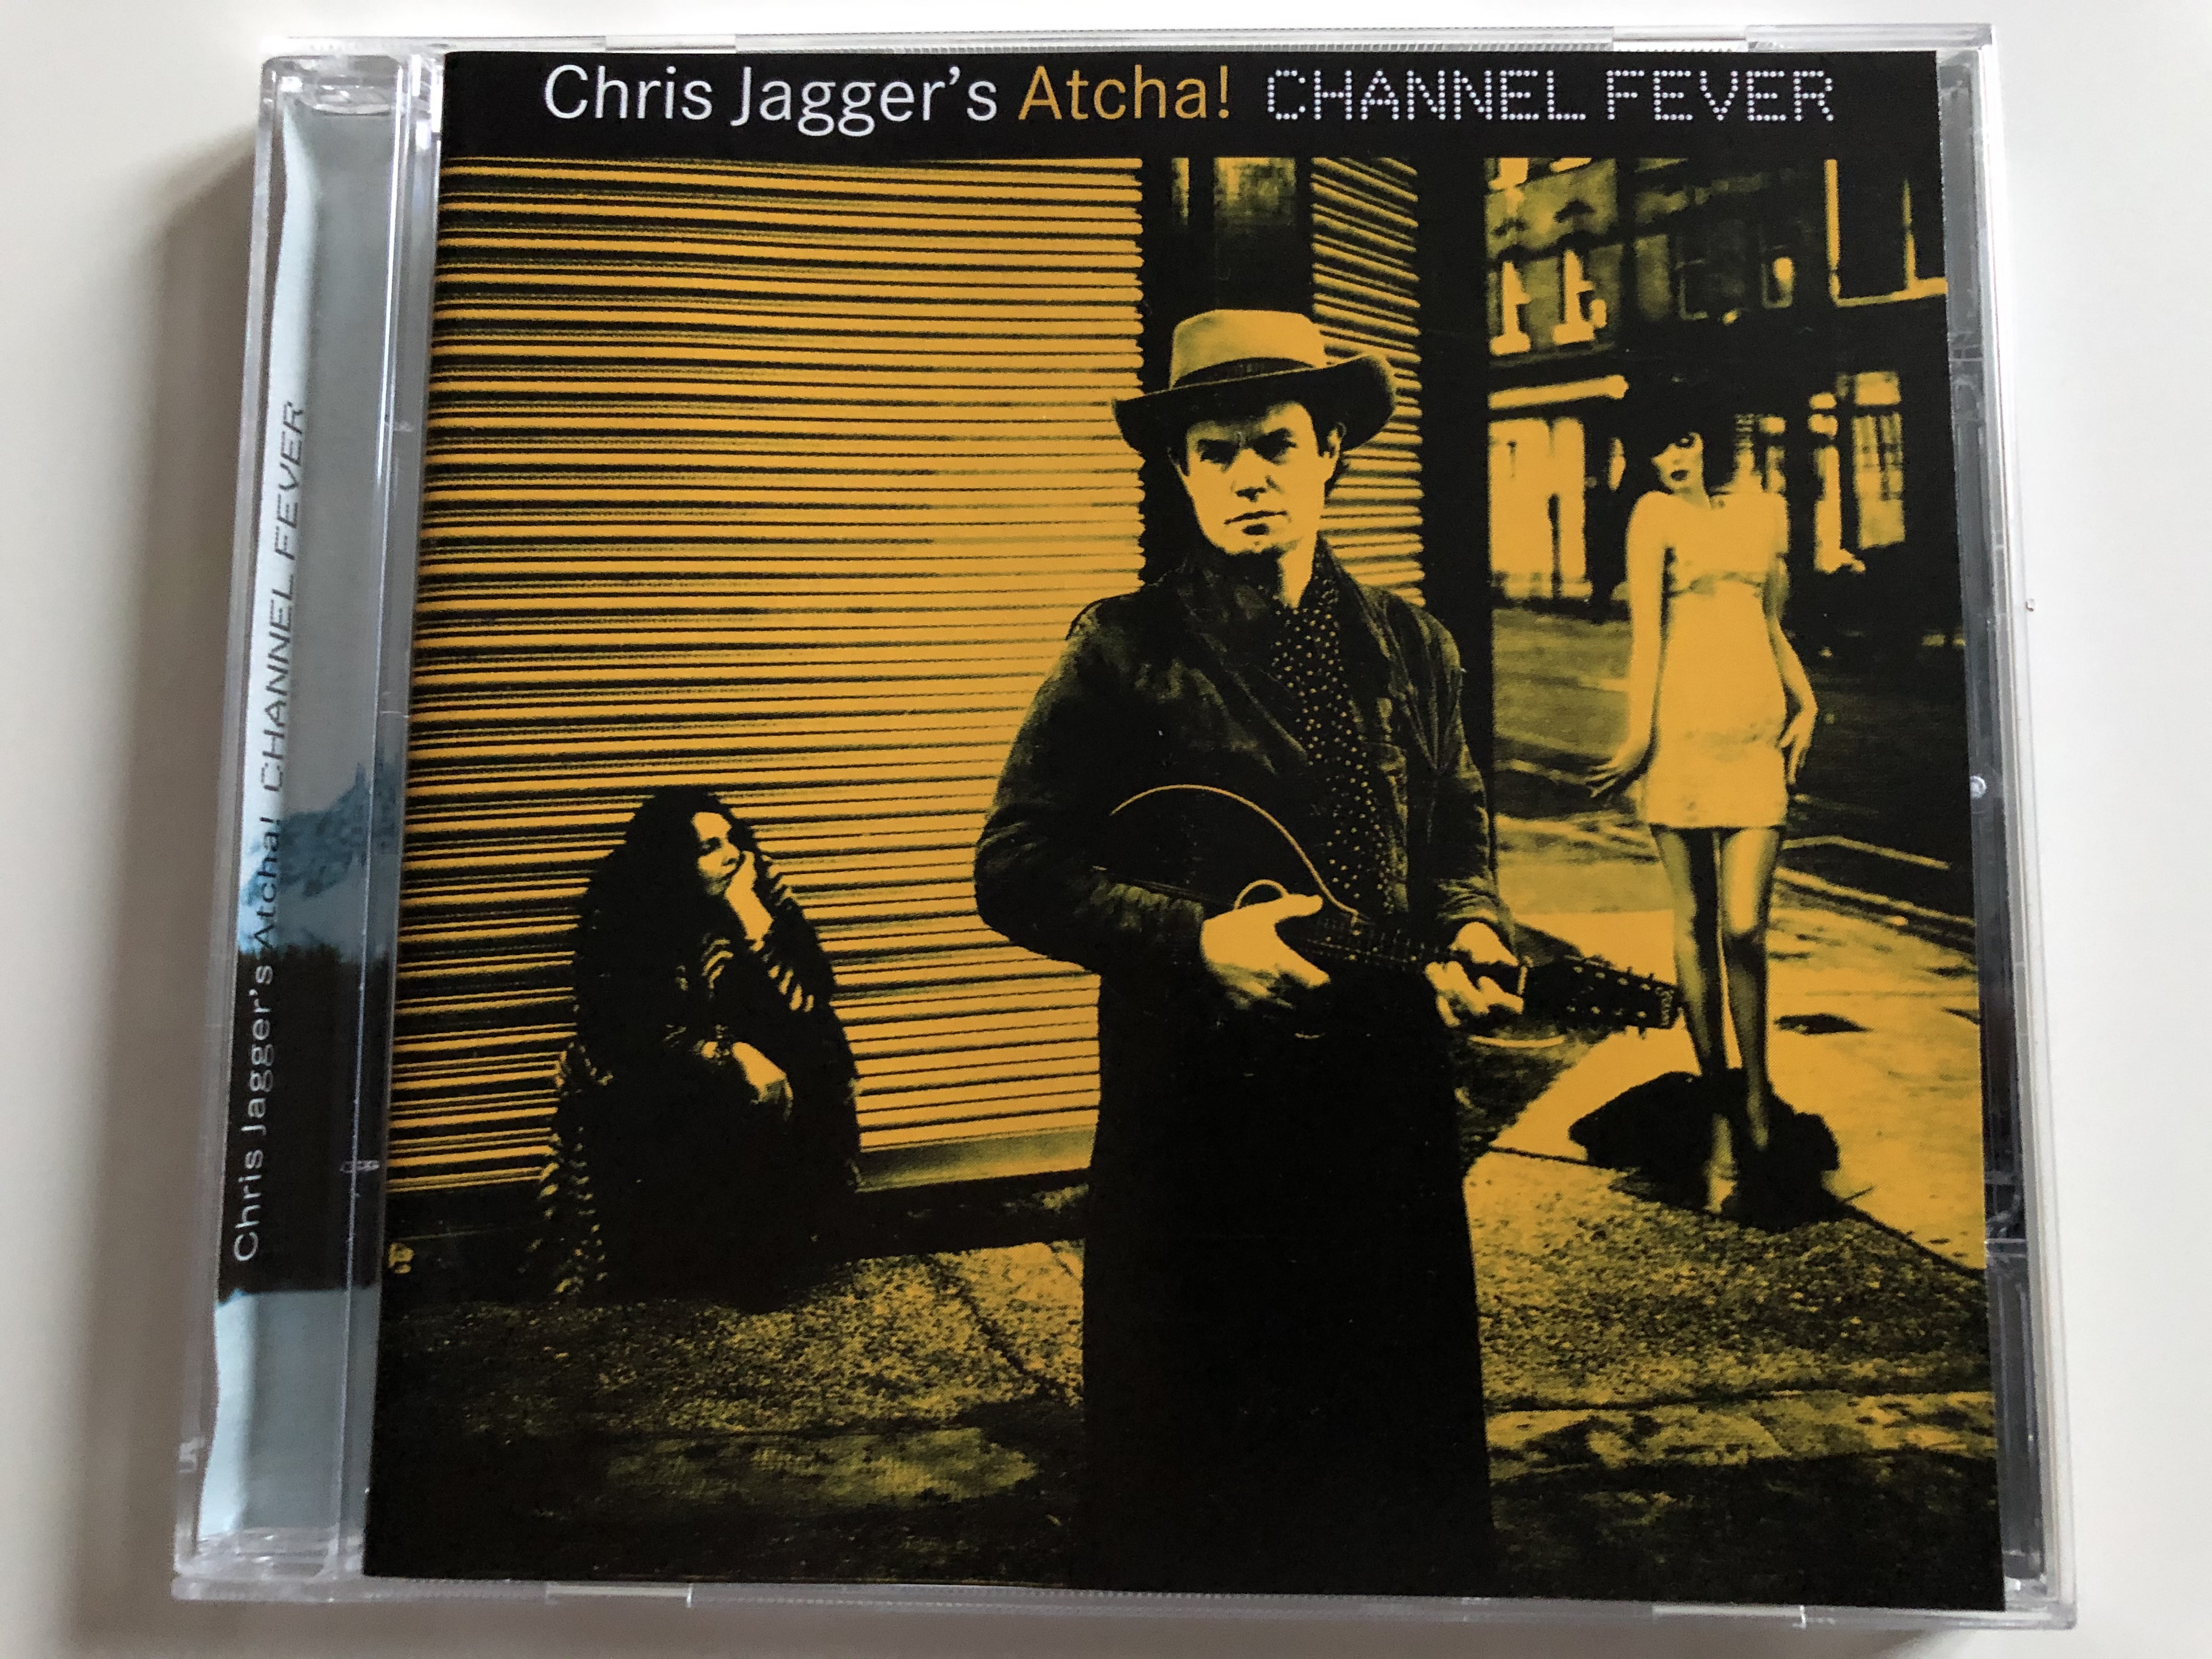 chris-jagger-s-atcha-channel-fever-hypertension-audio-cd-1999-hyp9186-1-.jpg